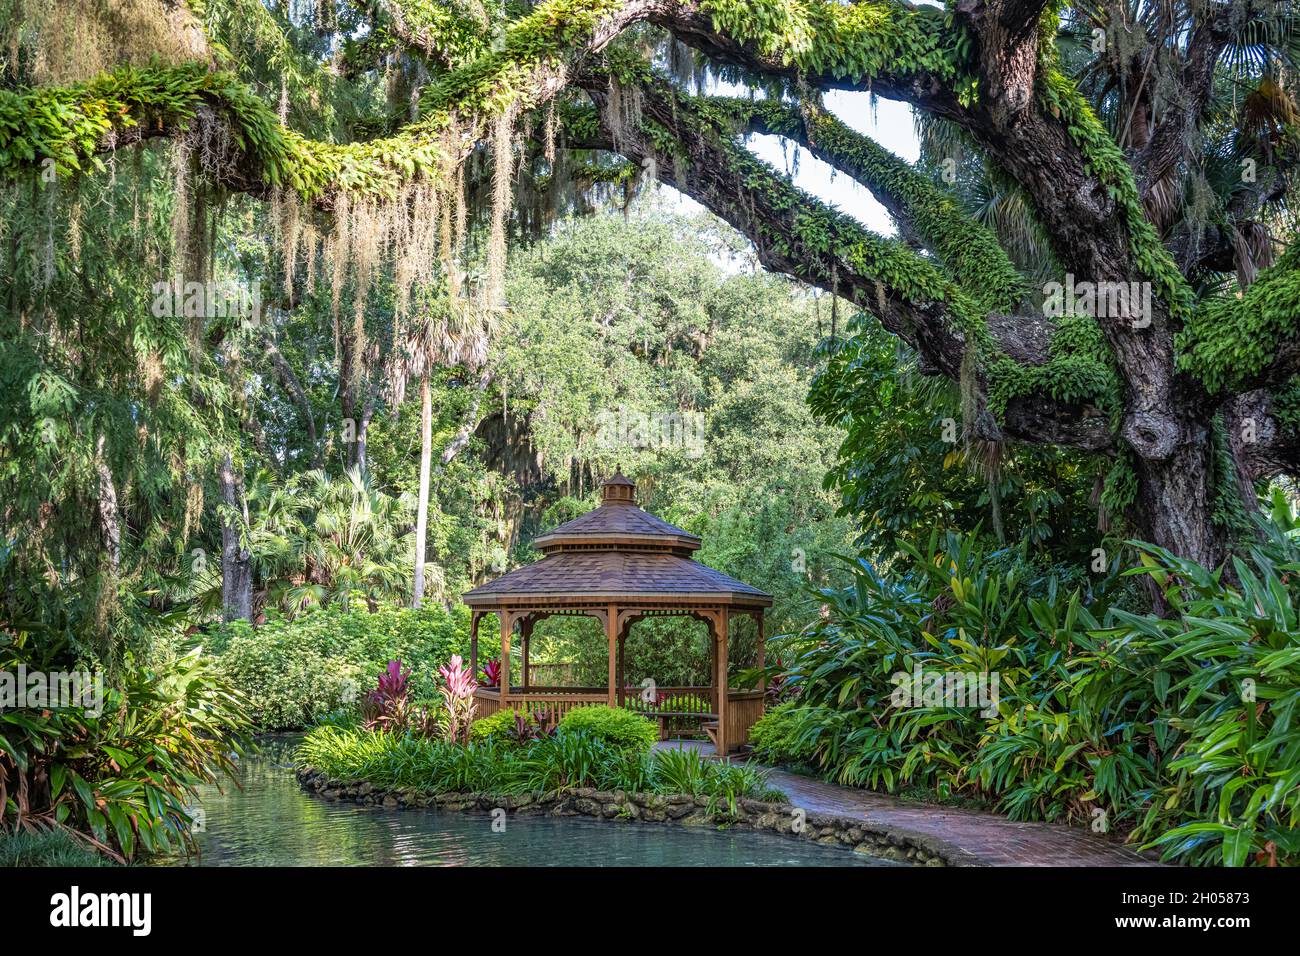 Waterfront wooden gazebo in the formal gardens at Washington Oaks Gardens State Park in Palm Coast, Florida. (USA) Stock Photo